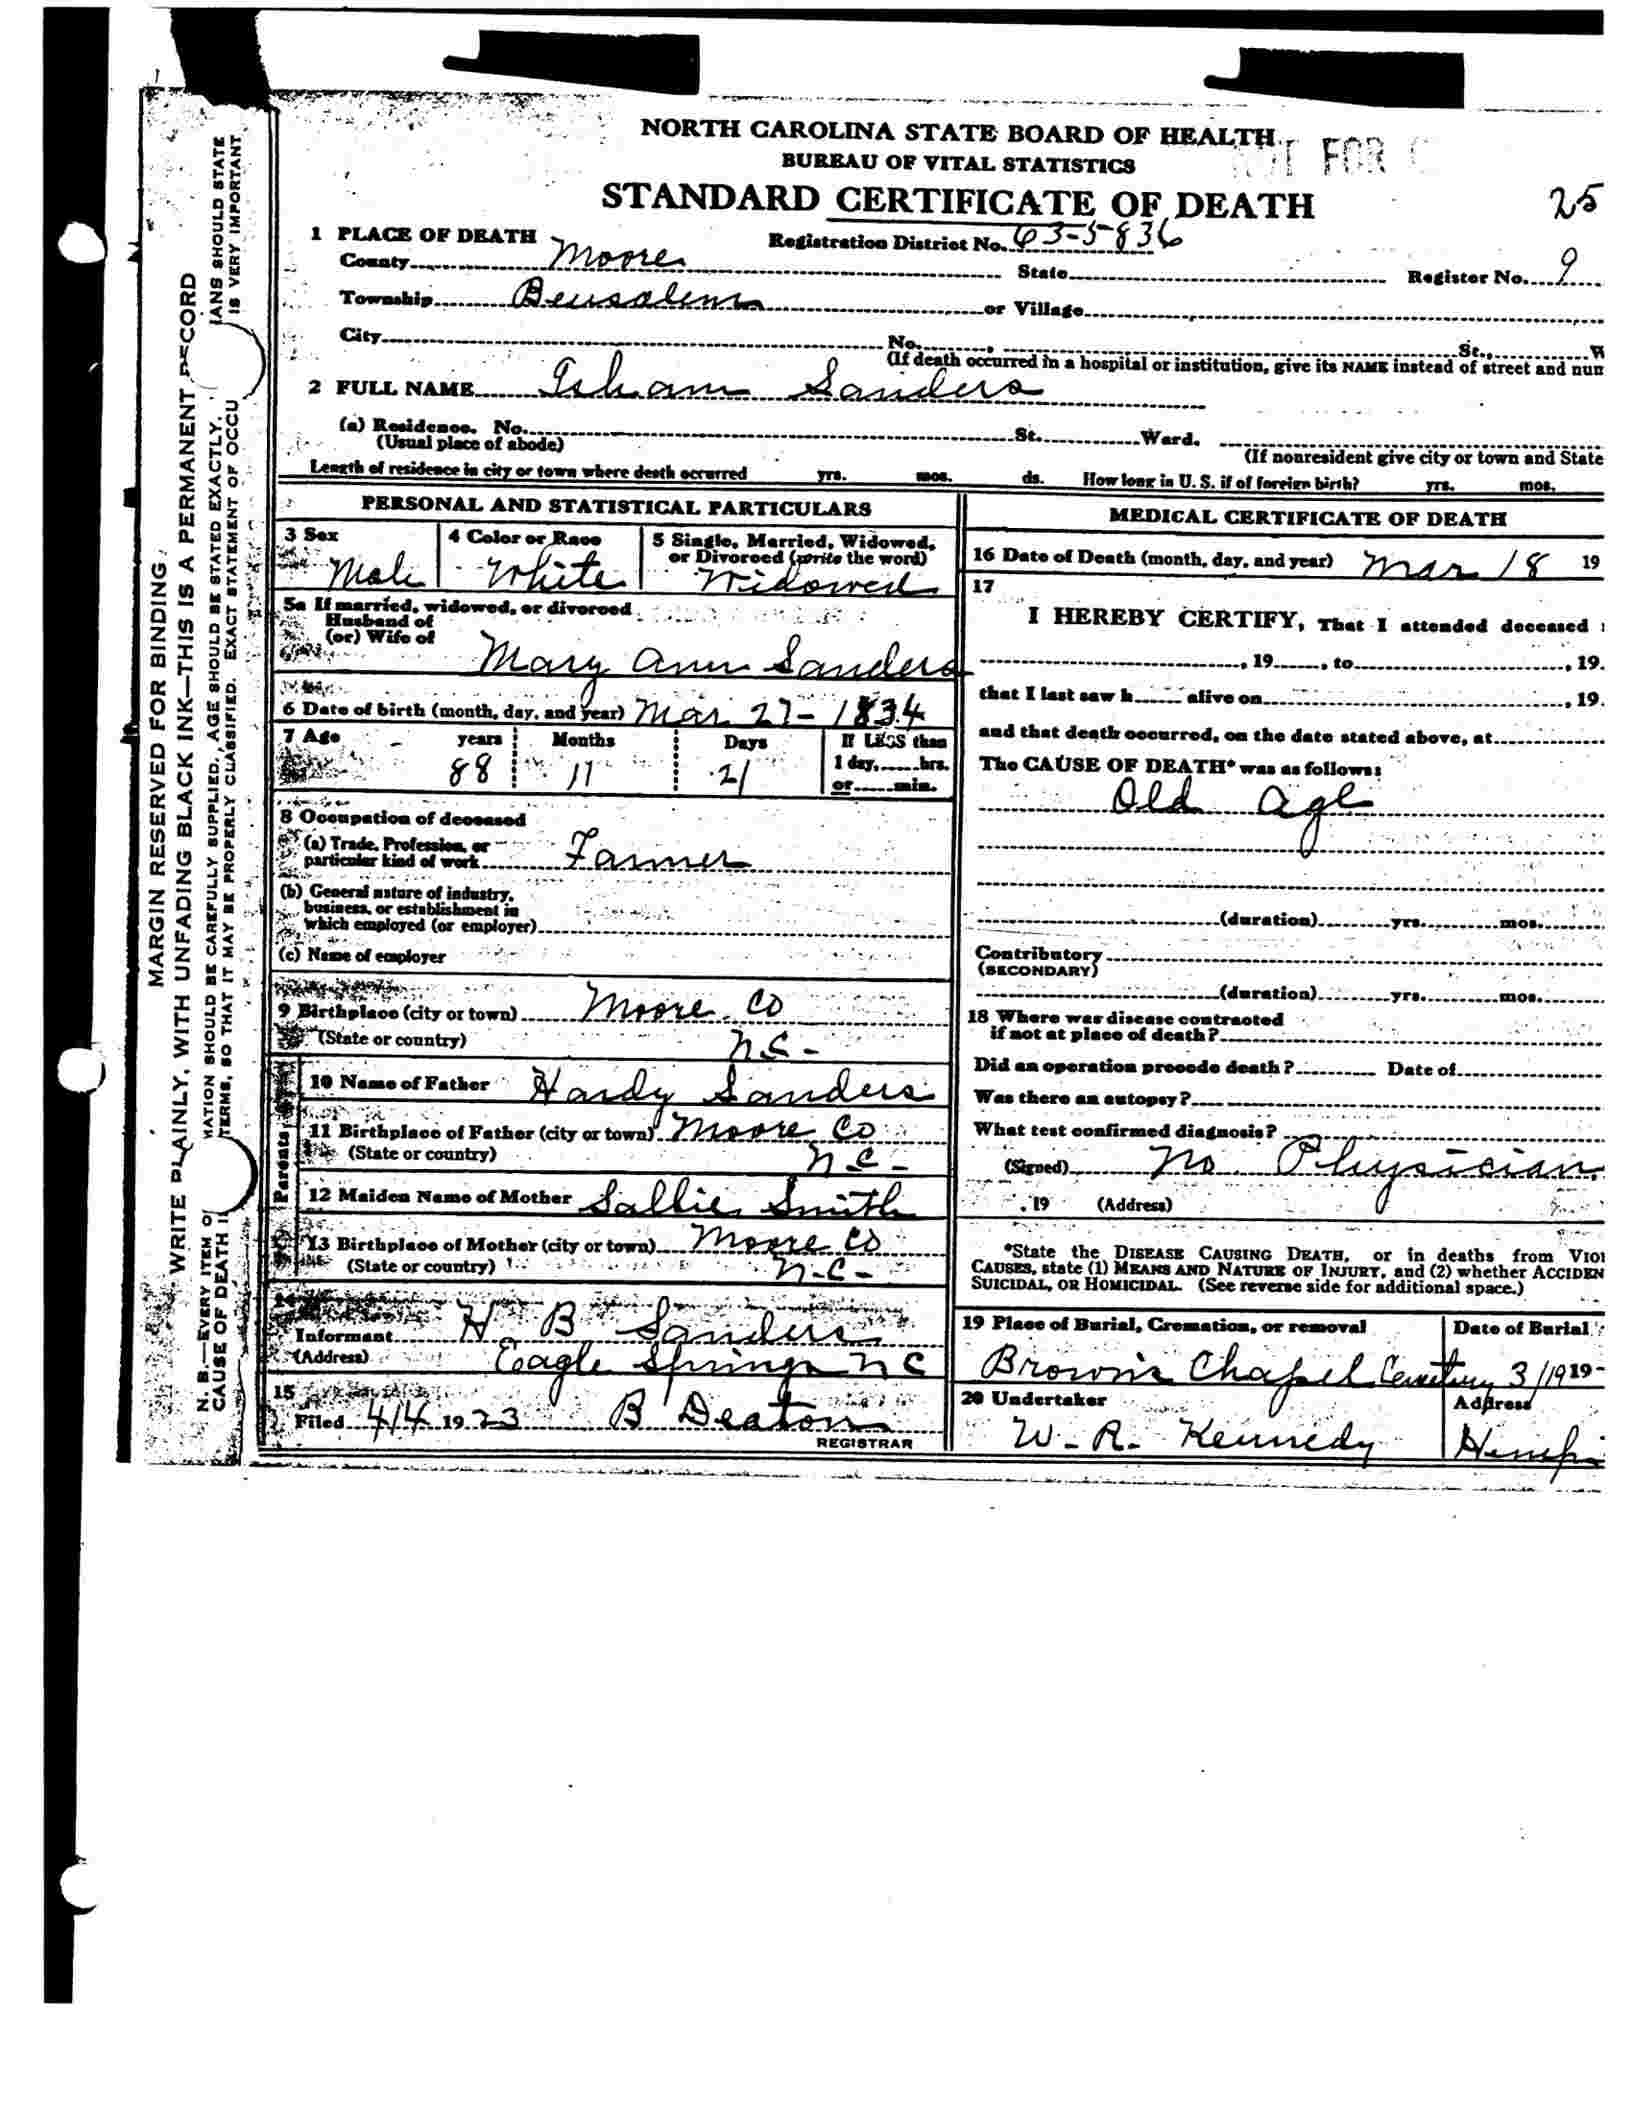 Isham Sanders Death Certificate